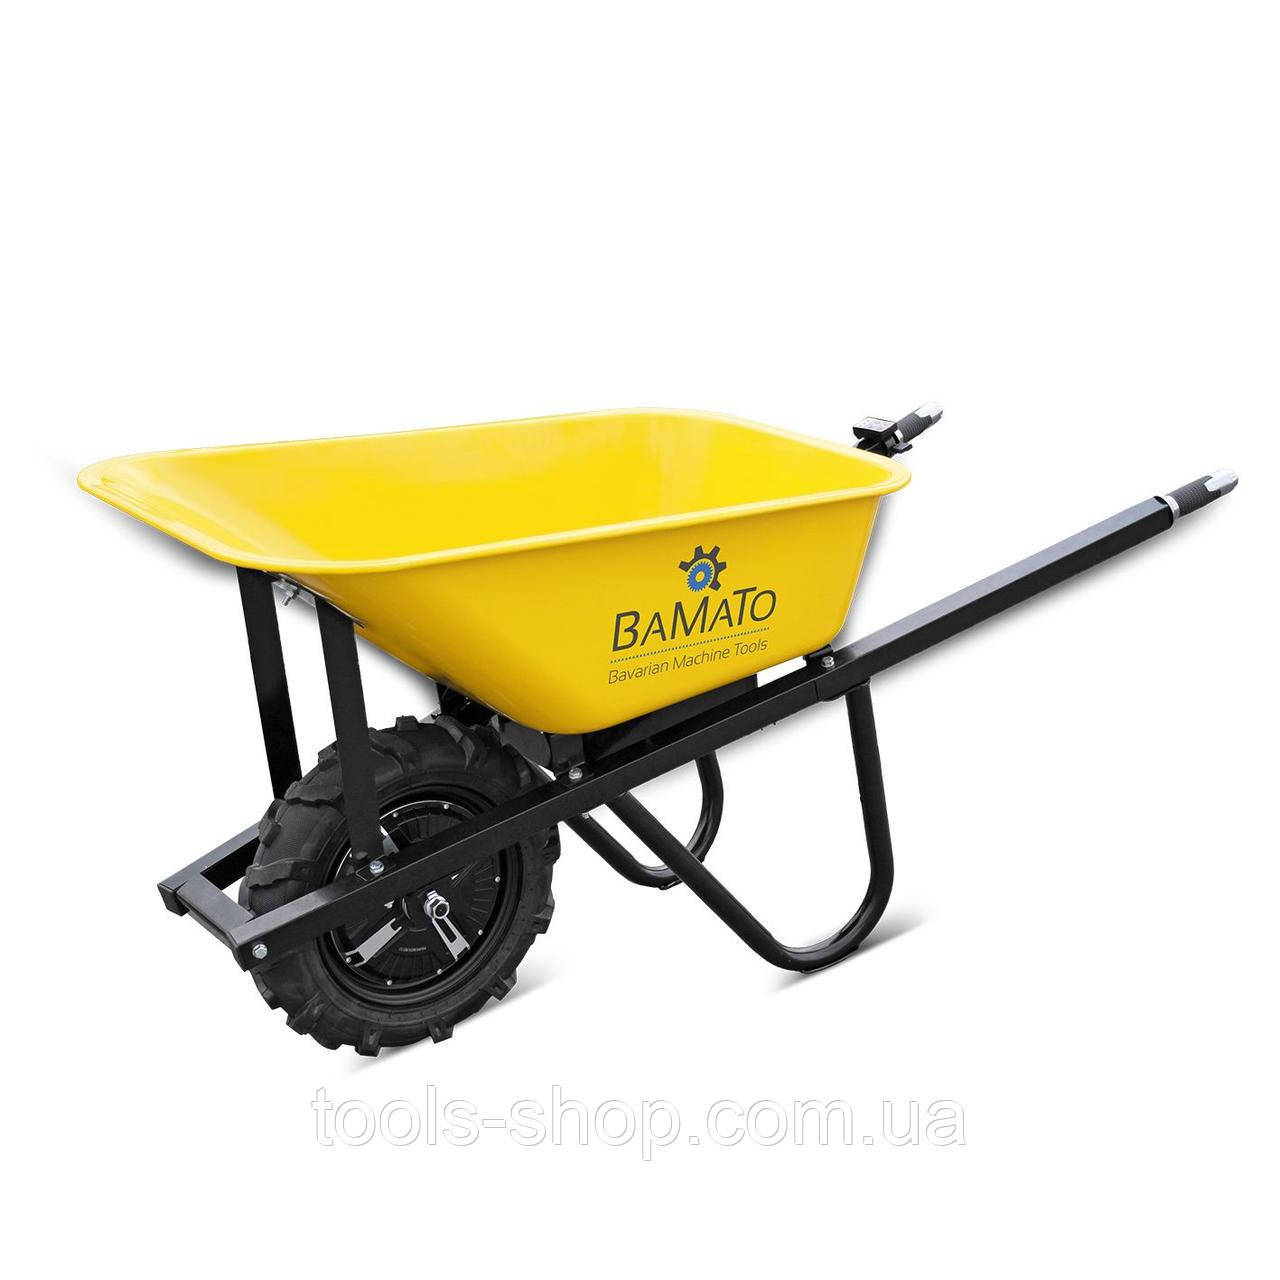 Акумуляторна садова тачка BAMATO MTR-150 150 кг.